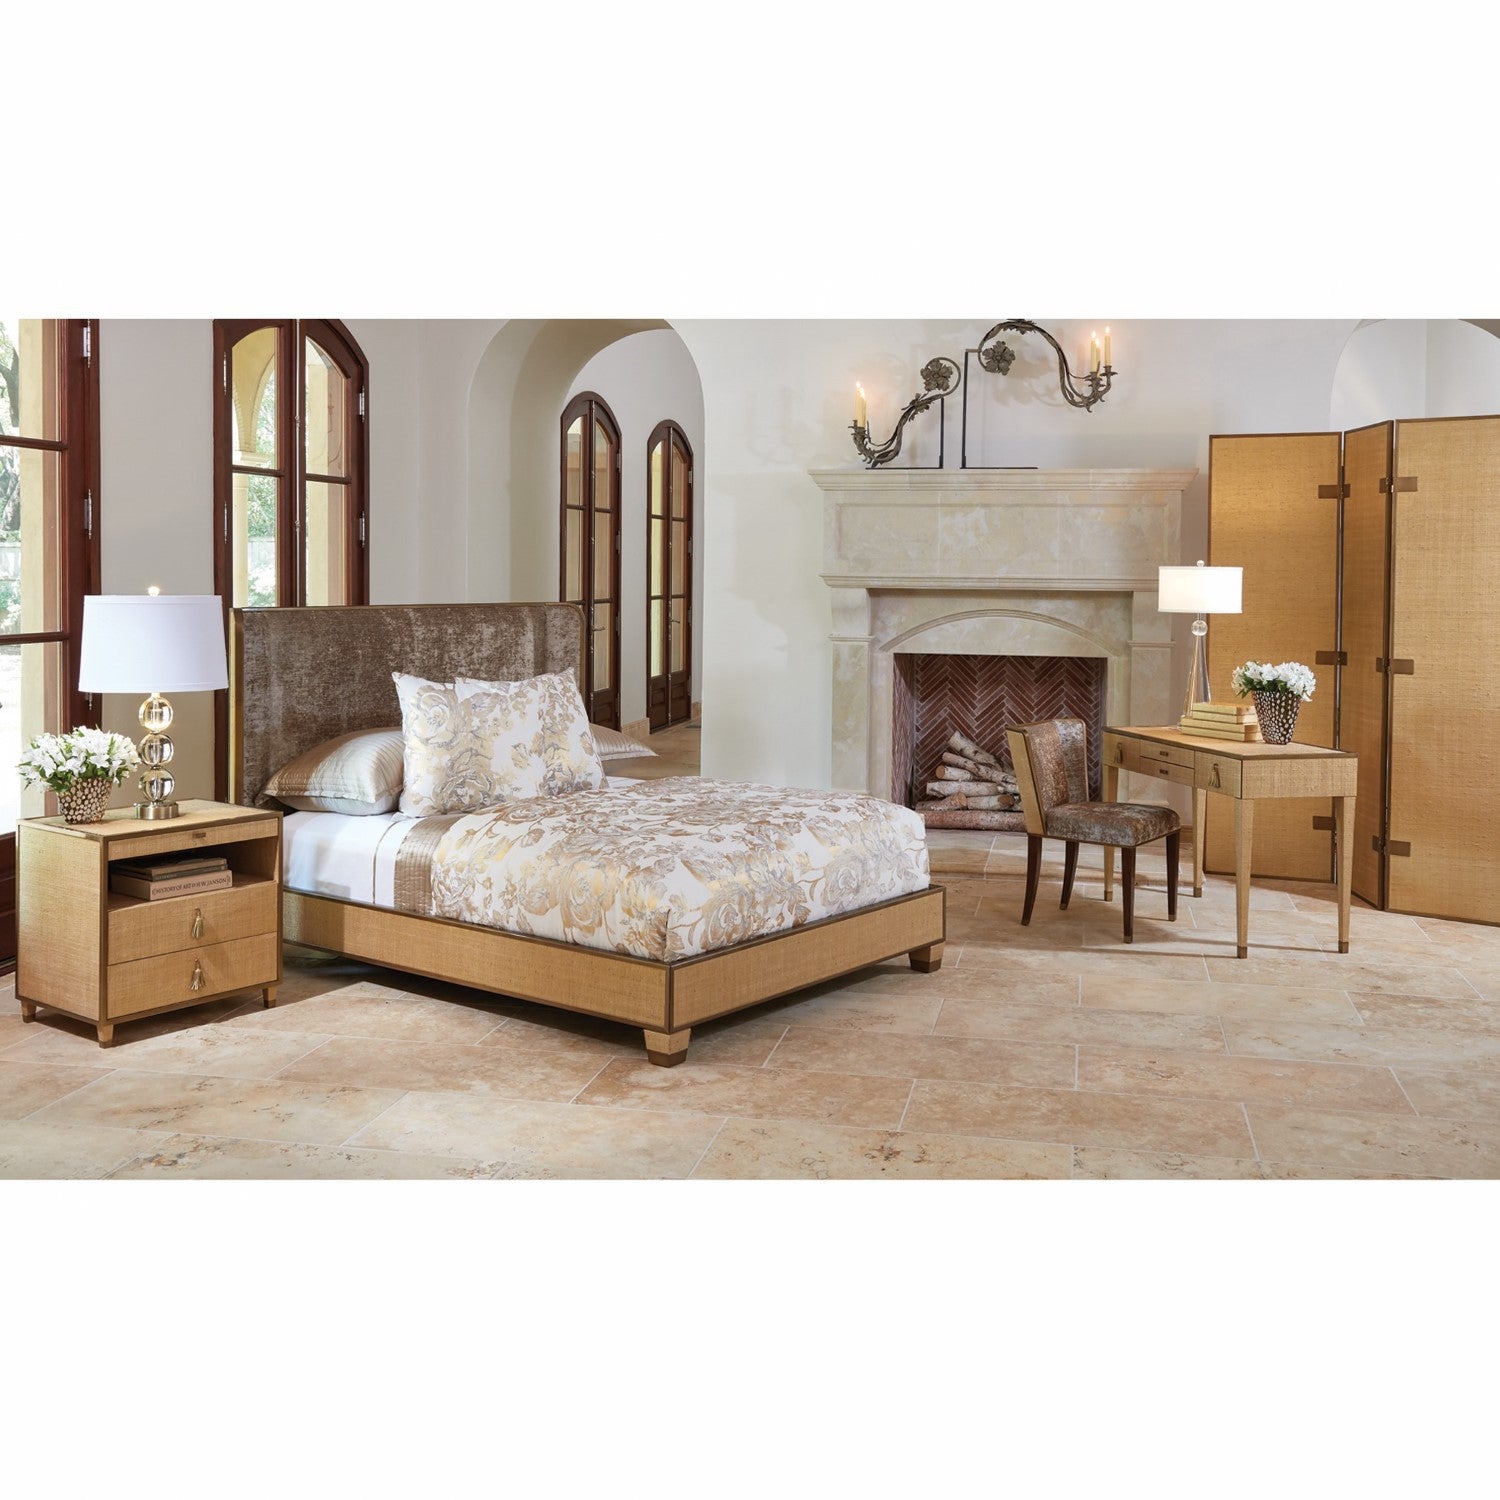 D'Oro Bed- Venetian Gold - Queen/ King - Grats Decor Interior Design & Build Inc.